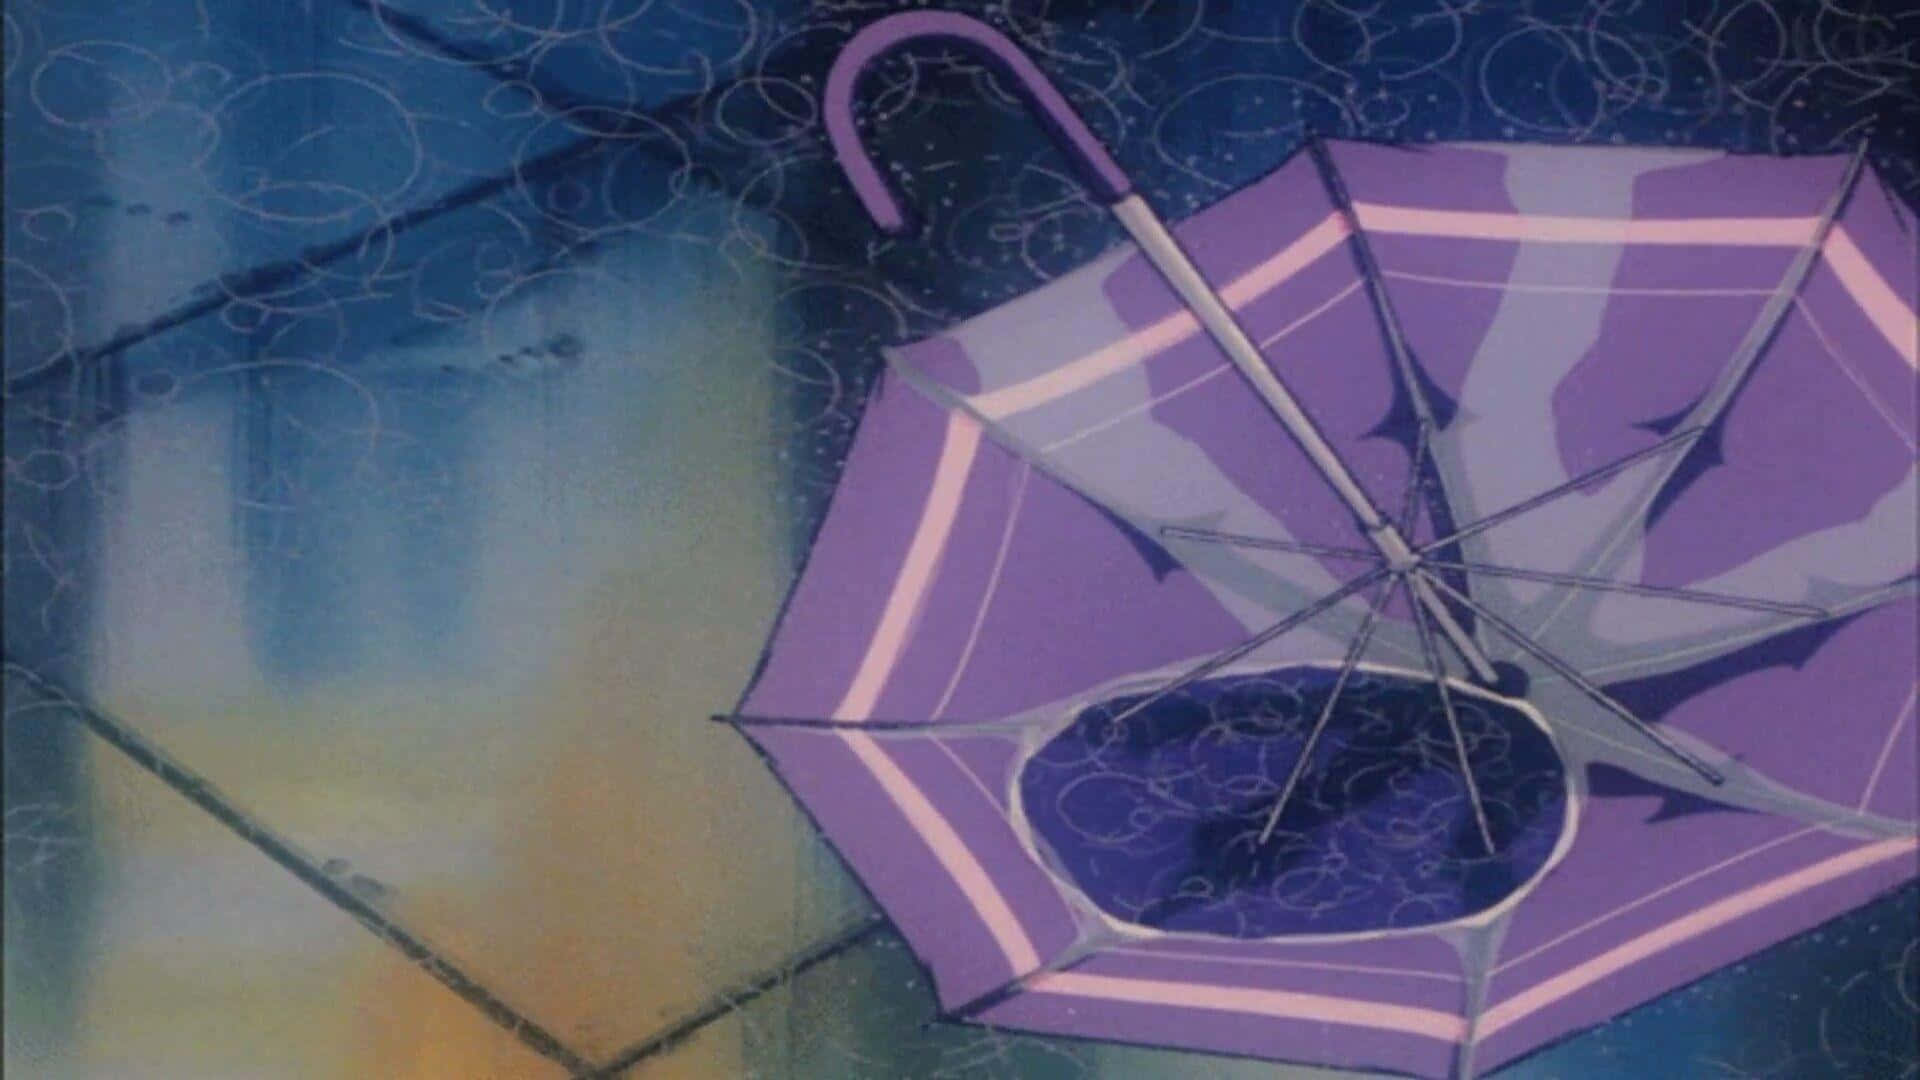 90s anime aesthetic wallpaper  Studio ghibli background Anime scenery  wallpaper Ghibli artwork